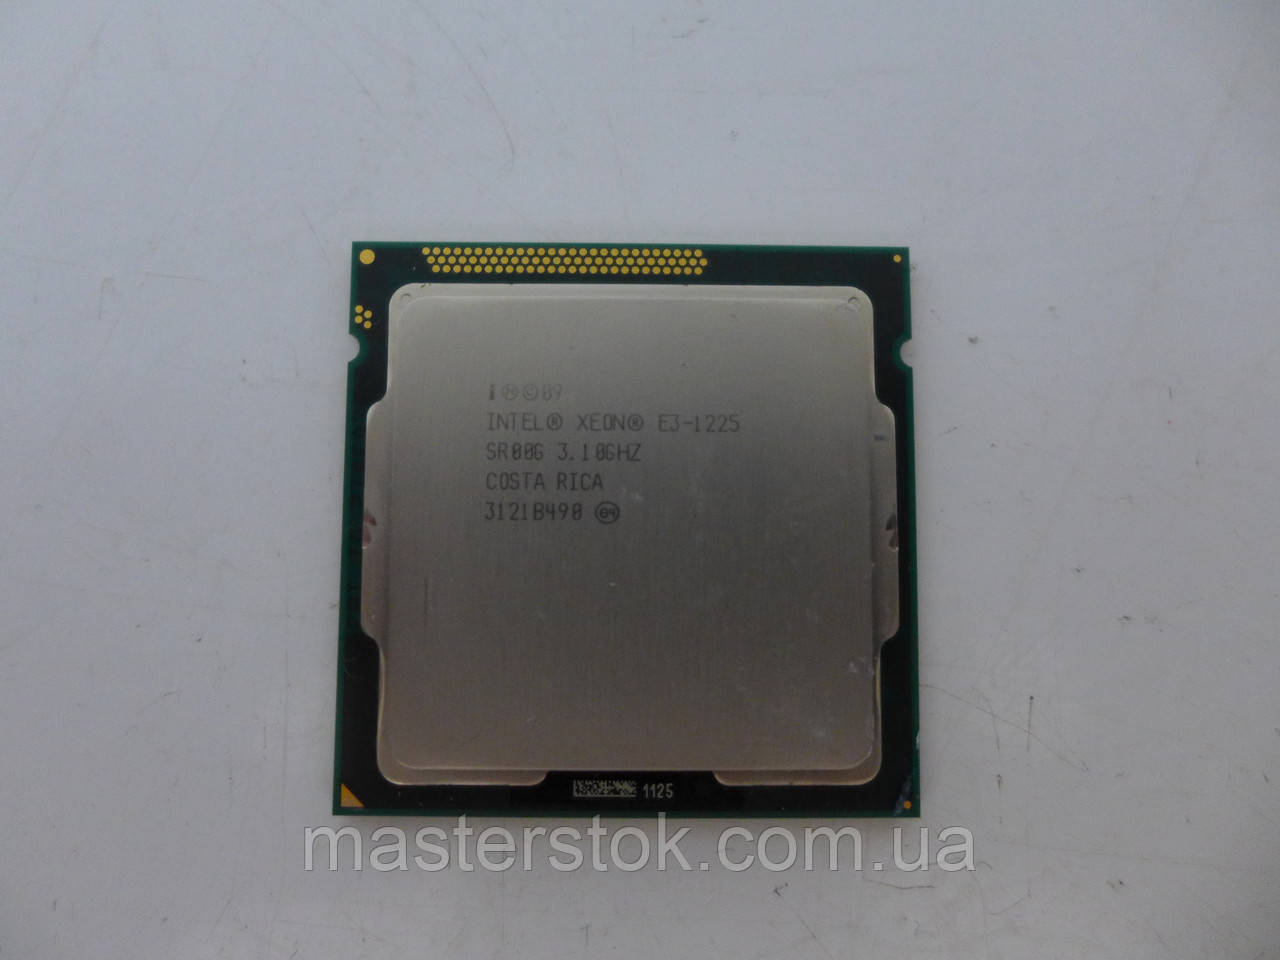 Процессор Intel Xeon E3-1225, аналог Core i5-2400